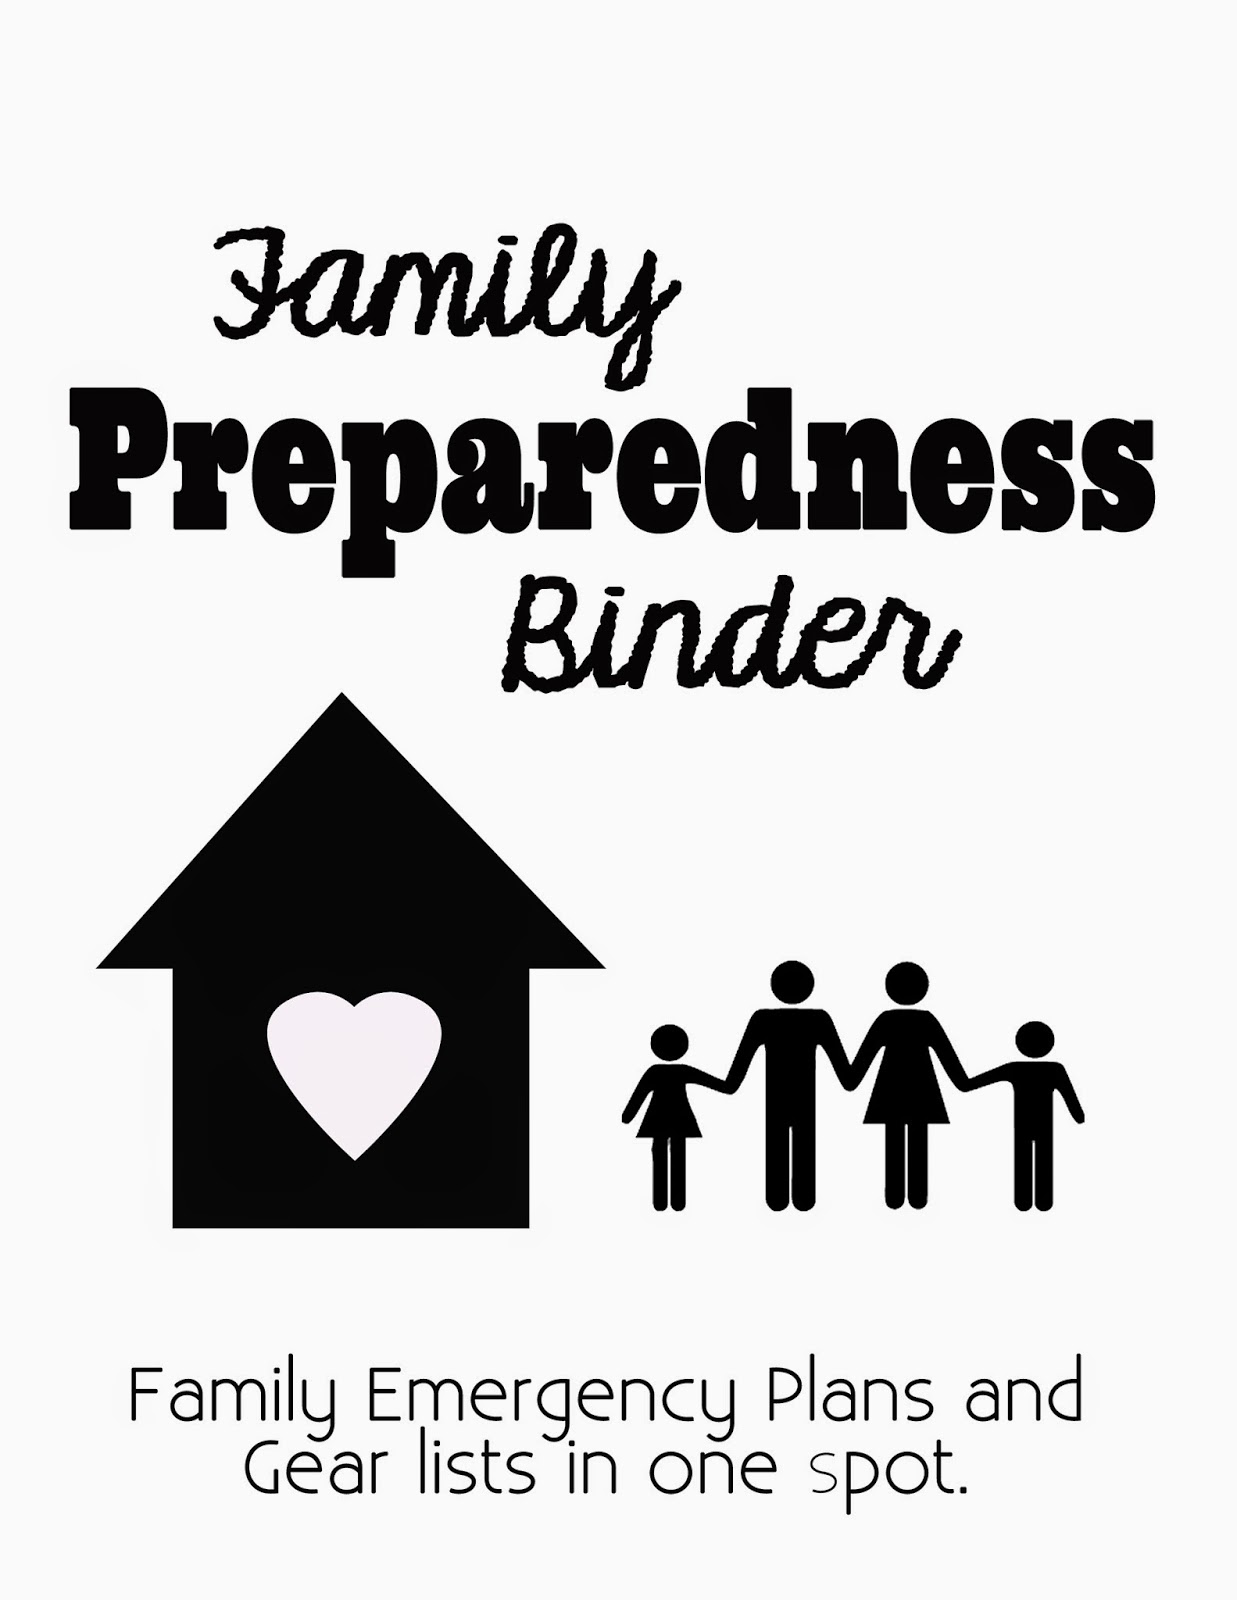 Family Preparedness Binder Information